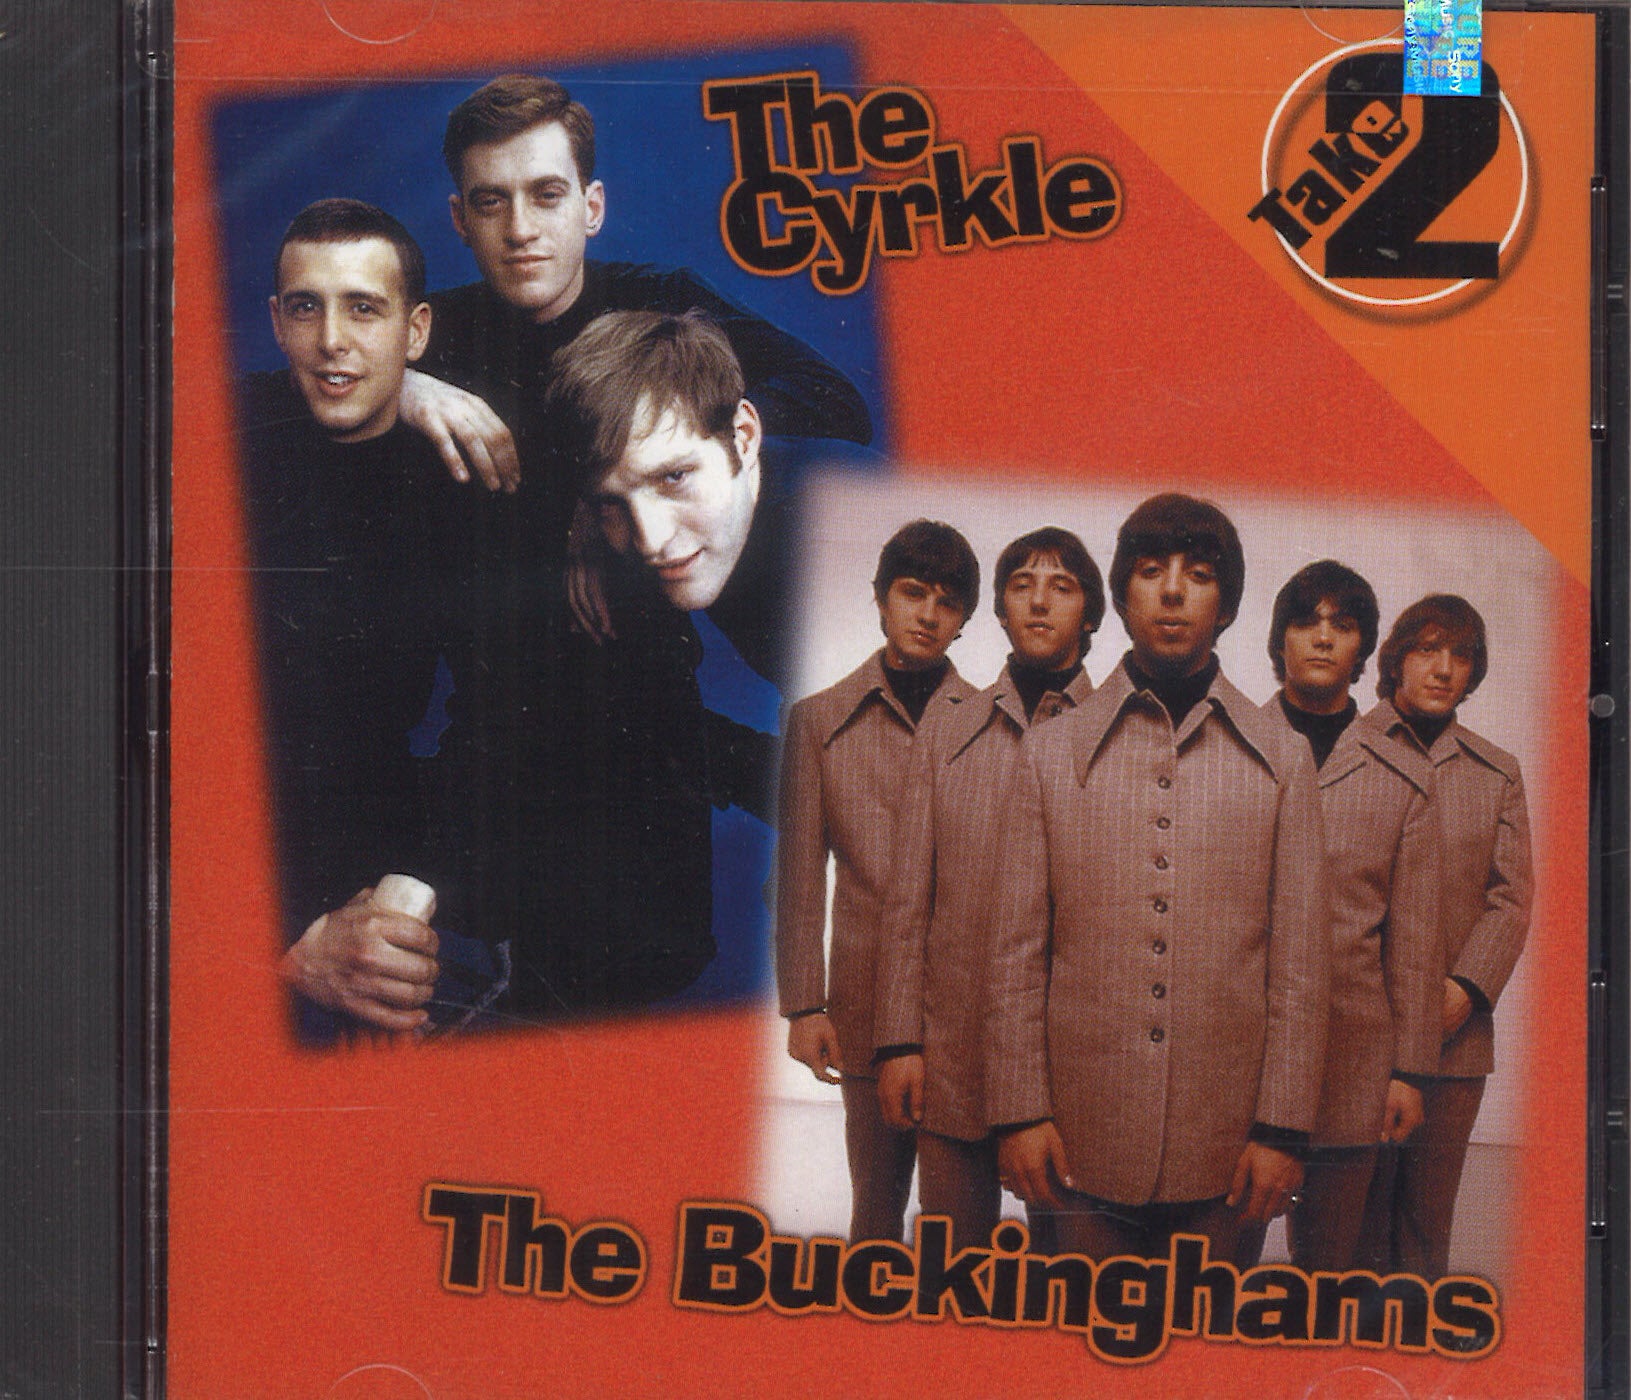 The Buckinghams & The Cyrkle Take 2